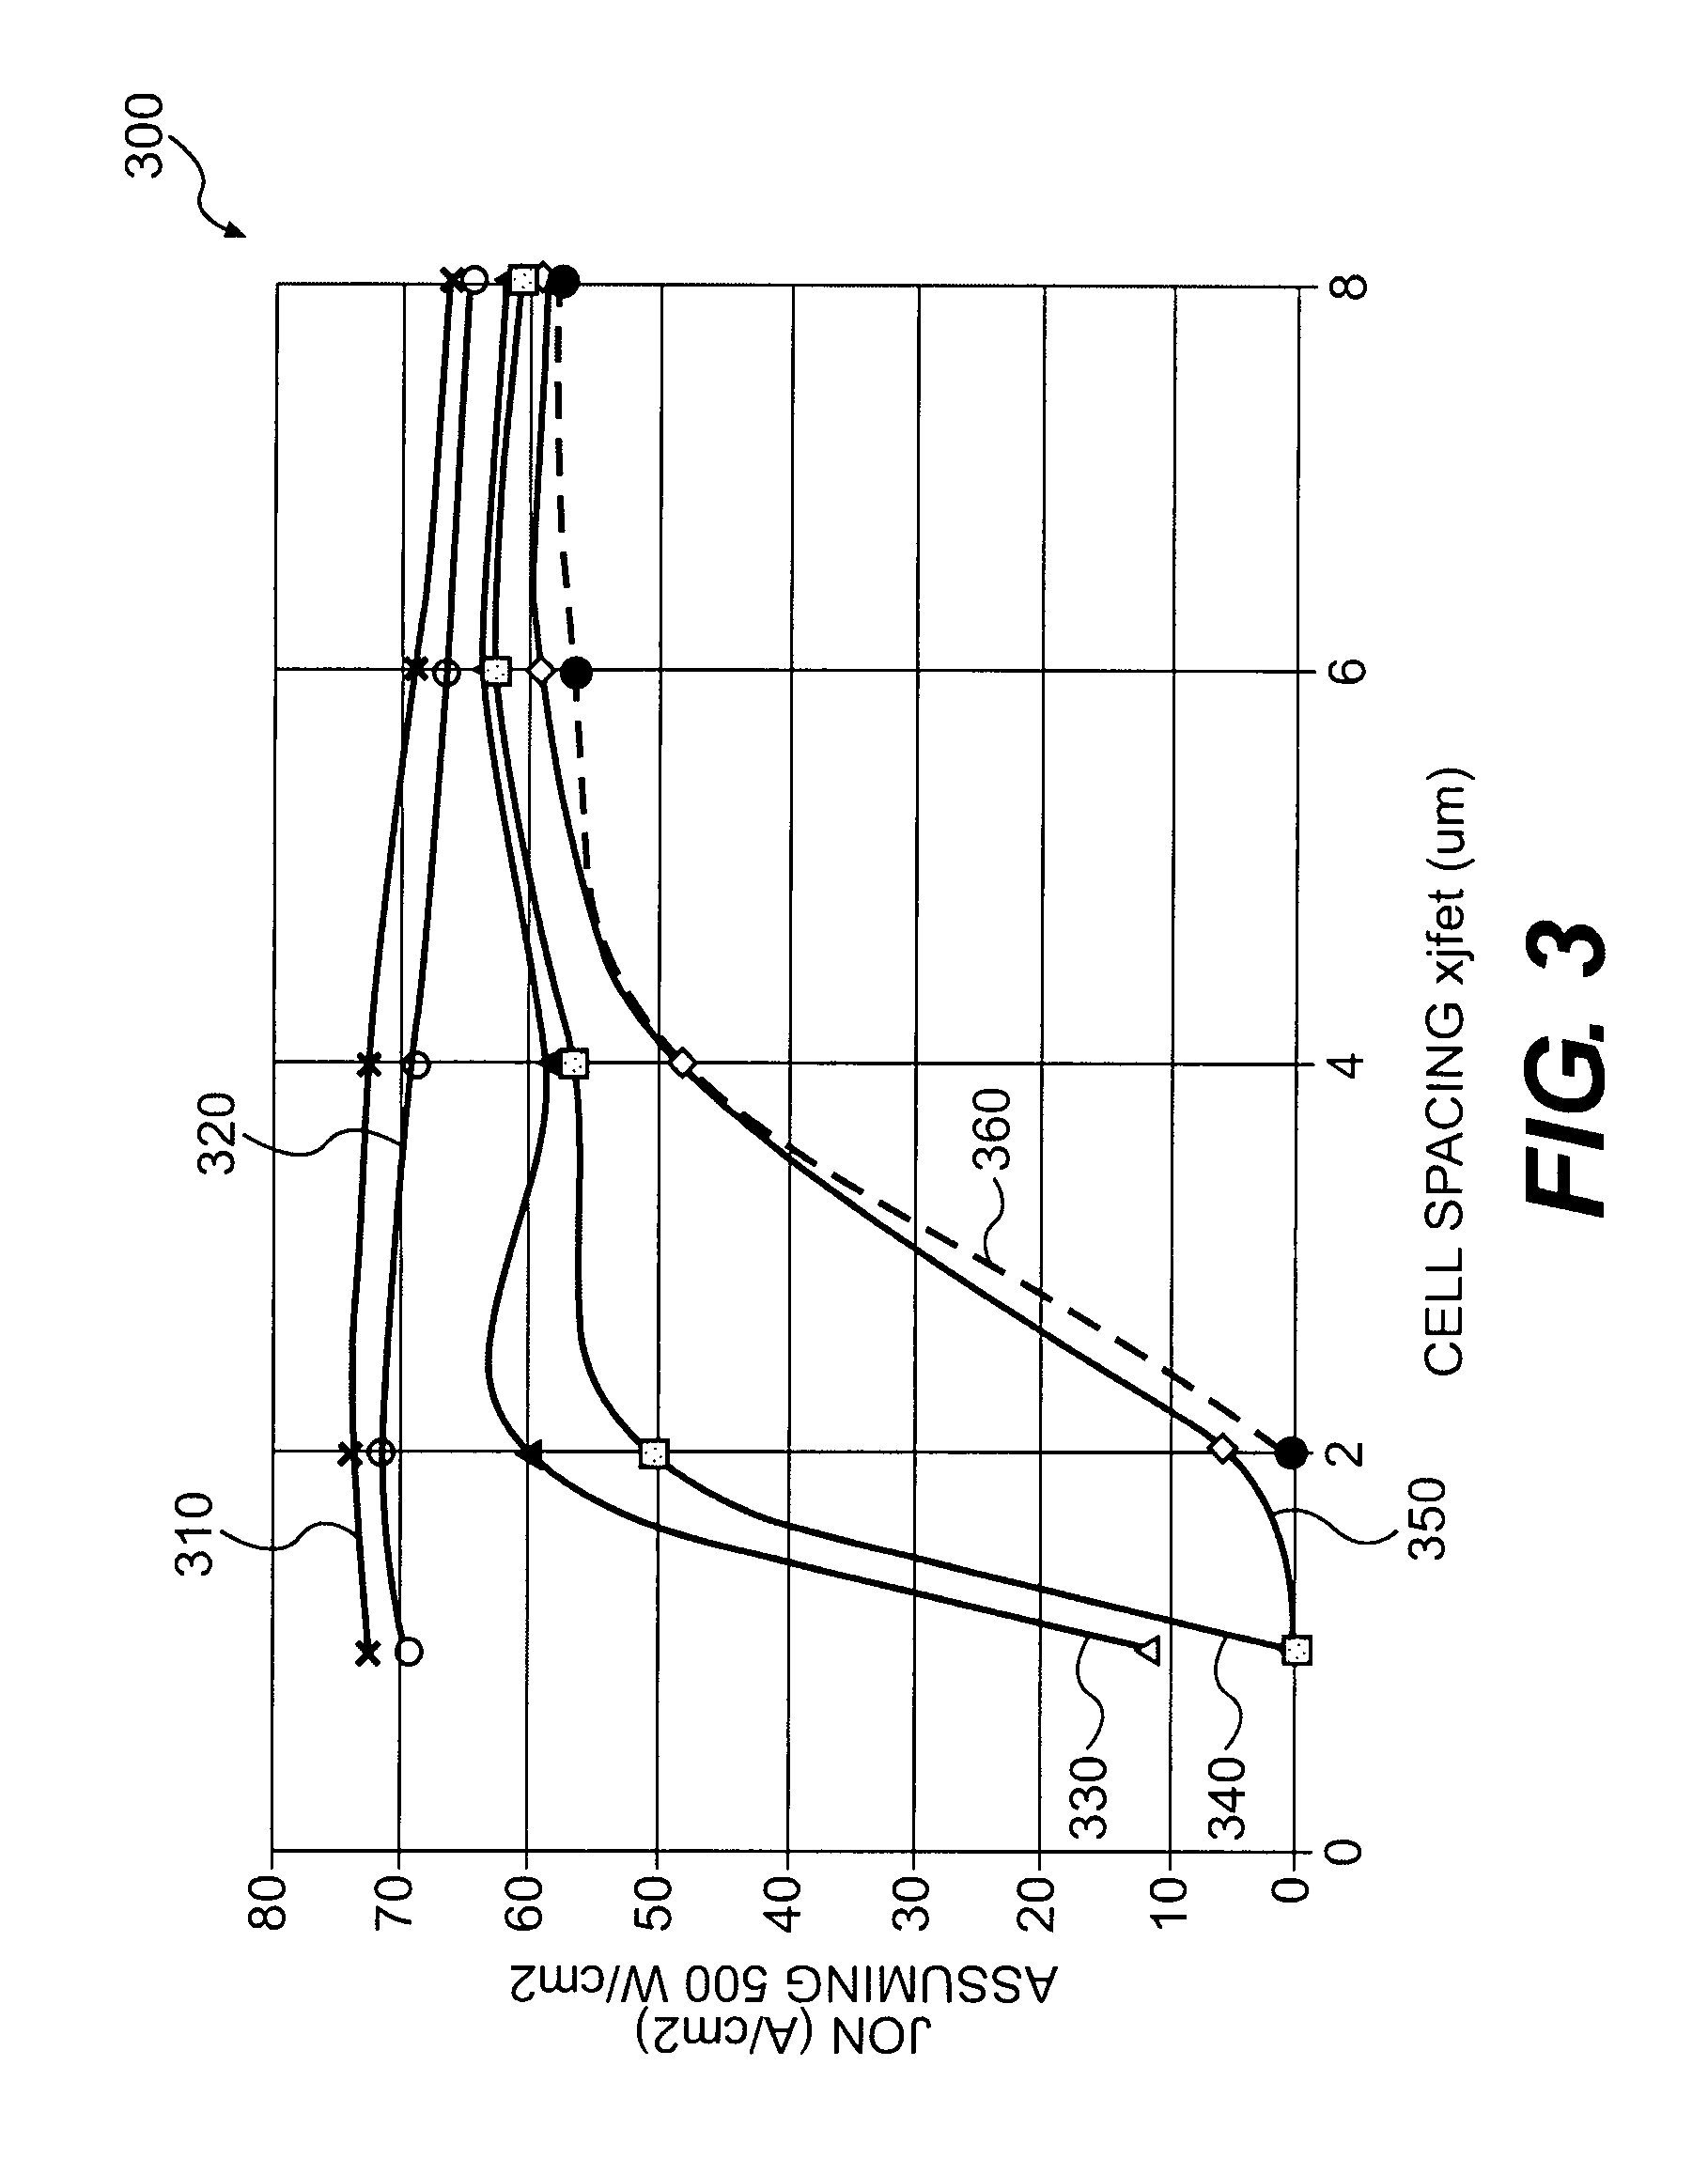 Insulated gate bipolar transistor with enhanced conductivity modulation